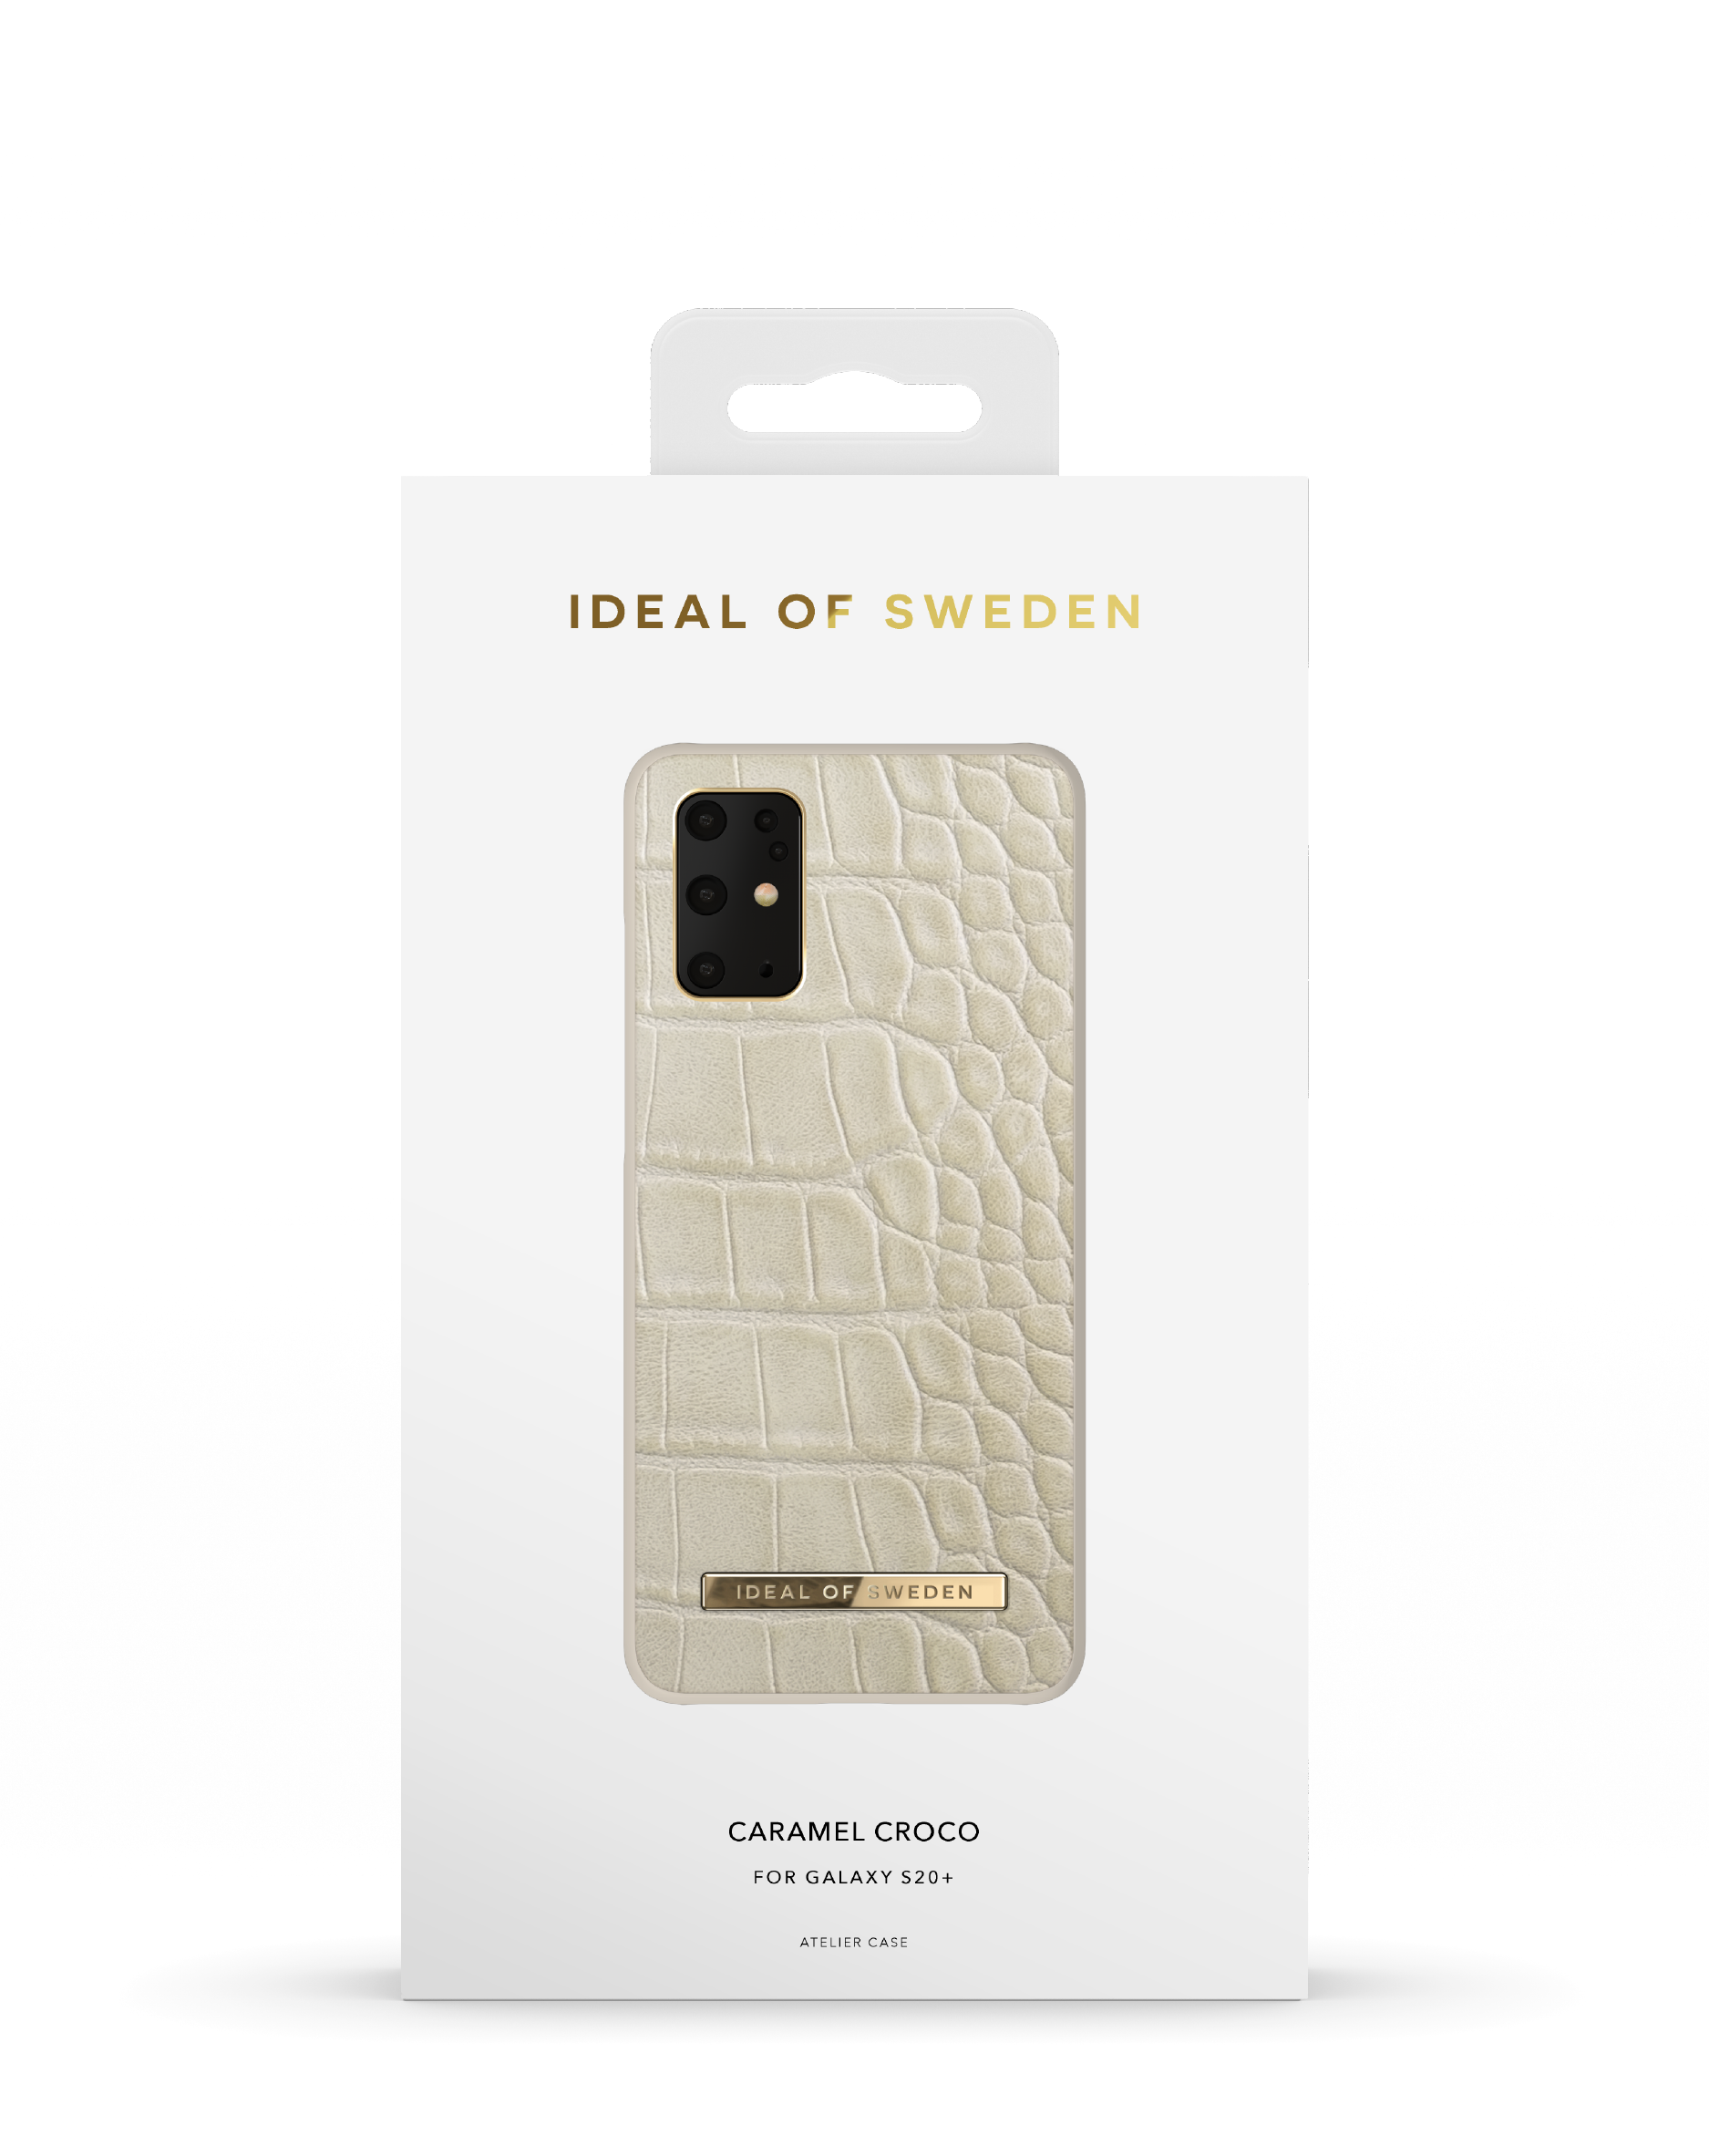 Caramel Croco OF IDEAL SWEDEN IDACAW20-S11P-243, Ultra, Backcover, Samsung, S20 Galaxy